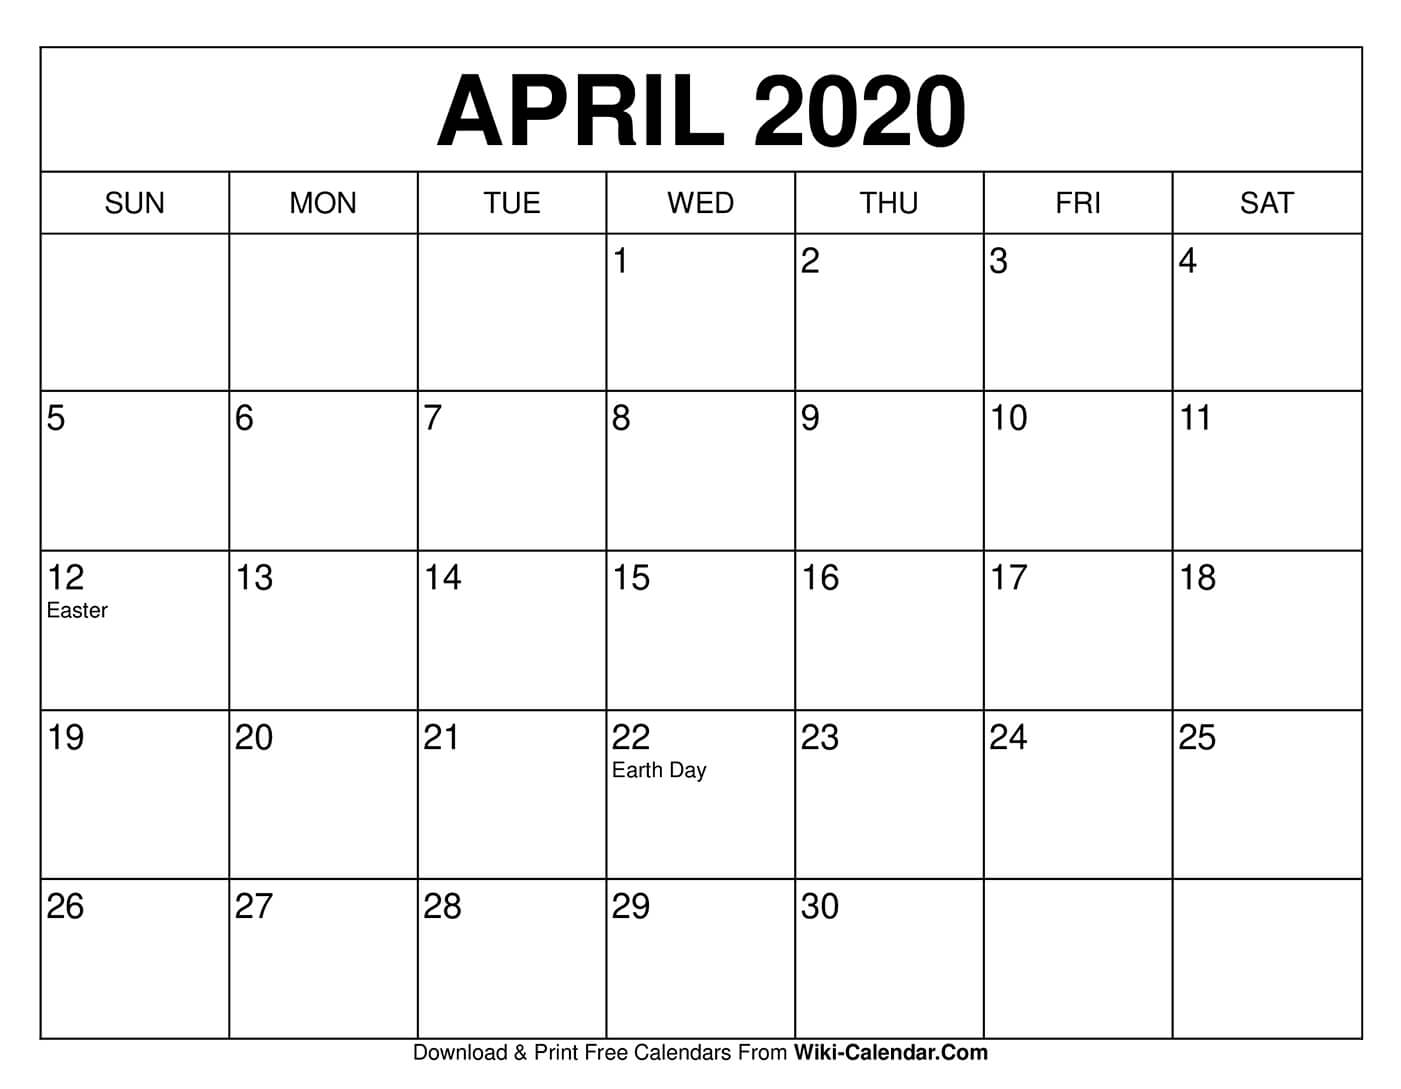 wiki calendar february 2021 Free Printable April 2020 Calendars wiki calendar february 2021